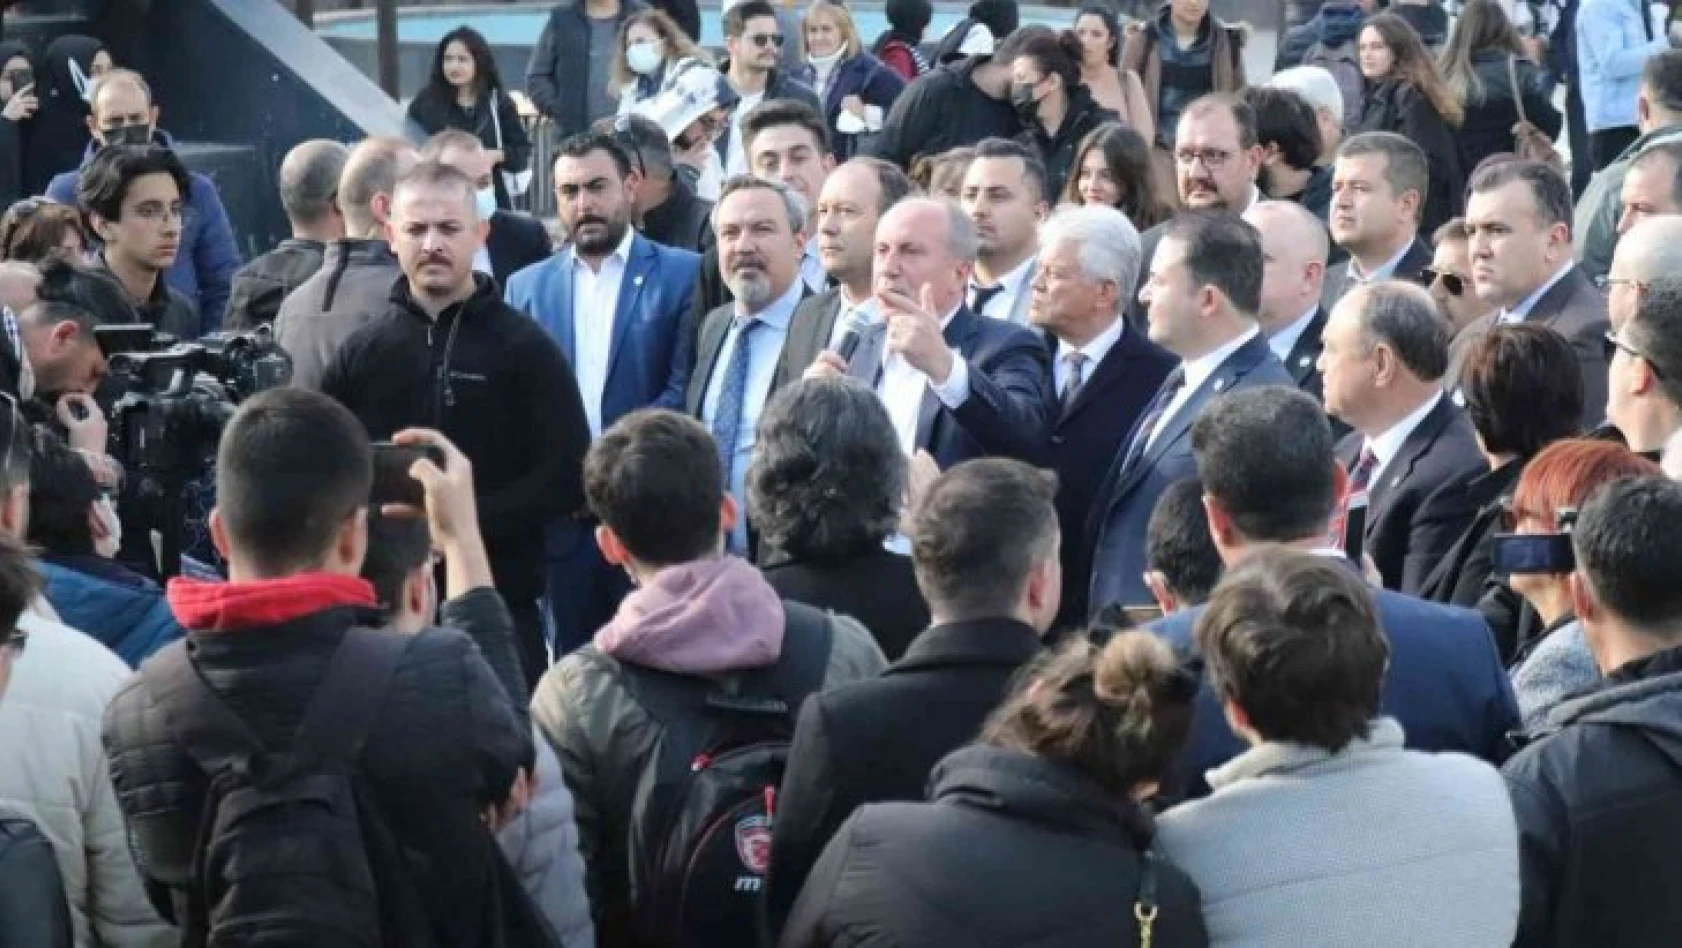 İnce'ye Erdoğan'a hakaretten ceza